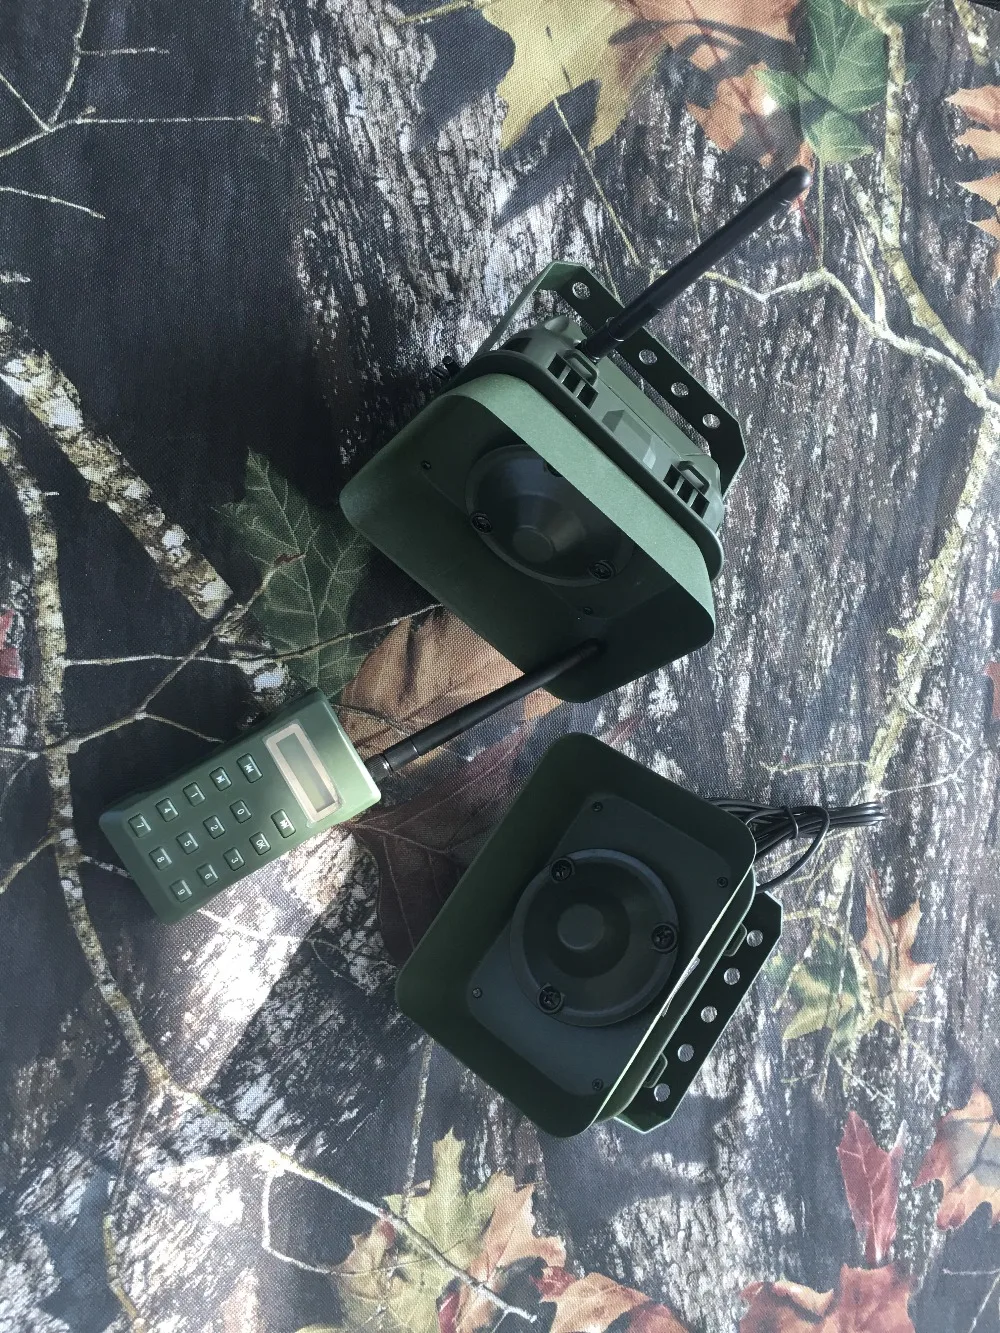 

PDDHKK 60W 160dB Loud Speaker With Timer ON or OFF Electric Remote Control Metal Shelf Bird Caller MP3 Waterproof Hunting Decoy